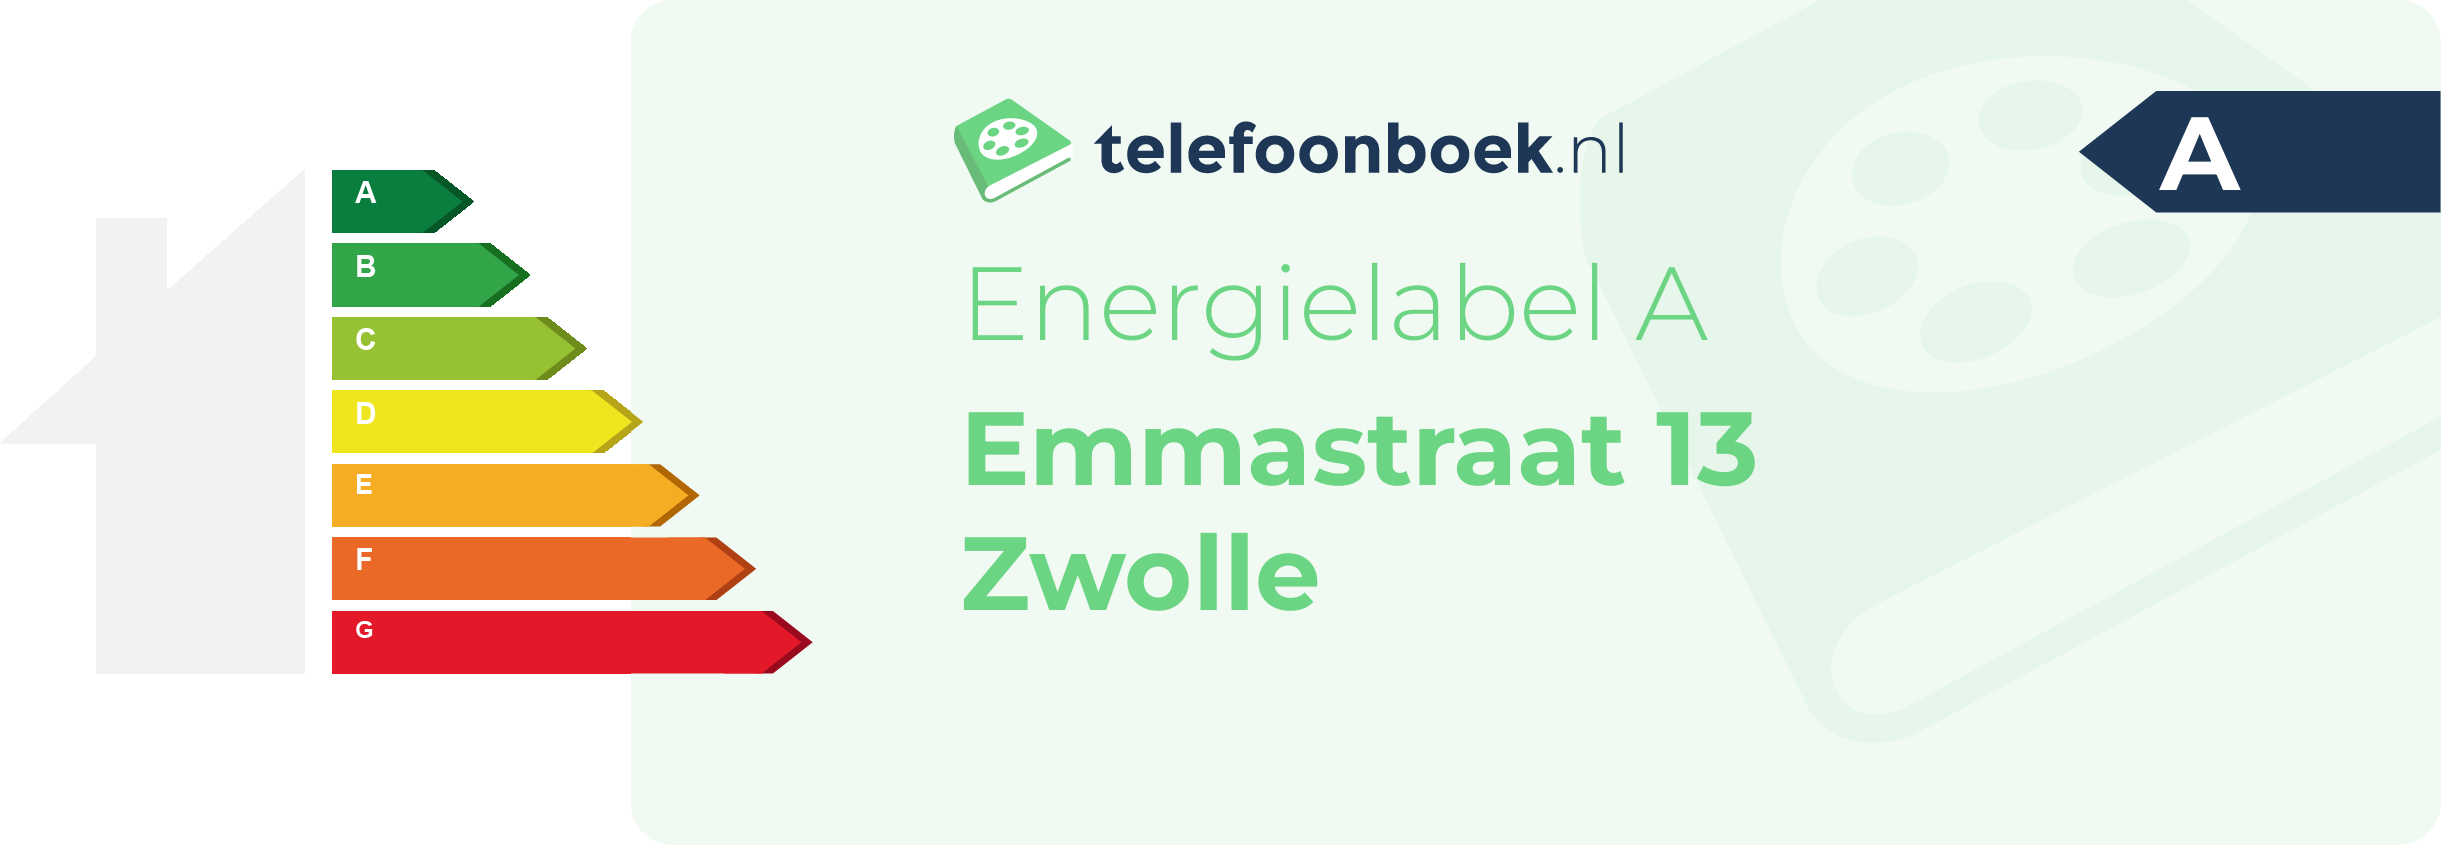 Energielabel Emmastraat 13 Zwolle